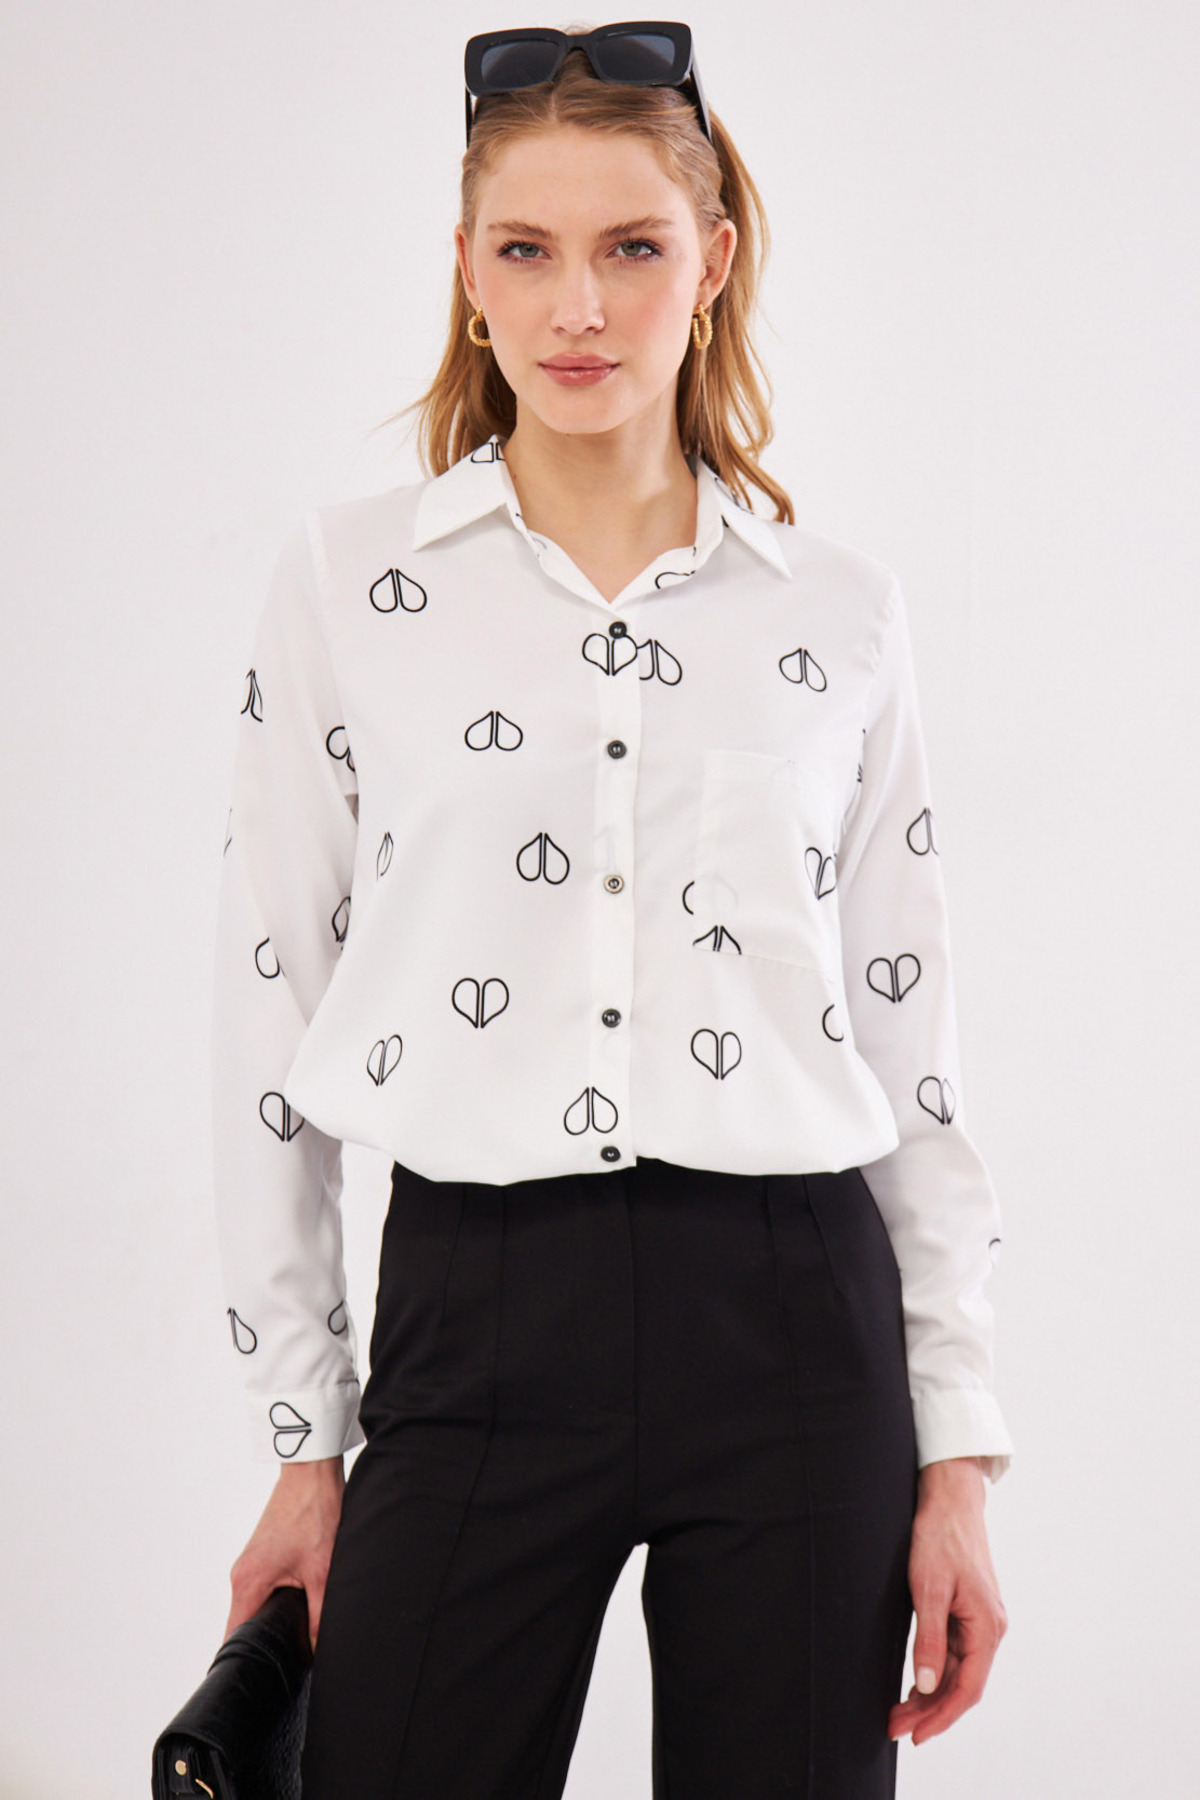 armonika Women's White Back Pleat Detail Single Pocket Patterned Long Sleeve Shirt